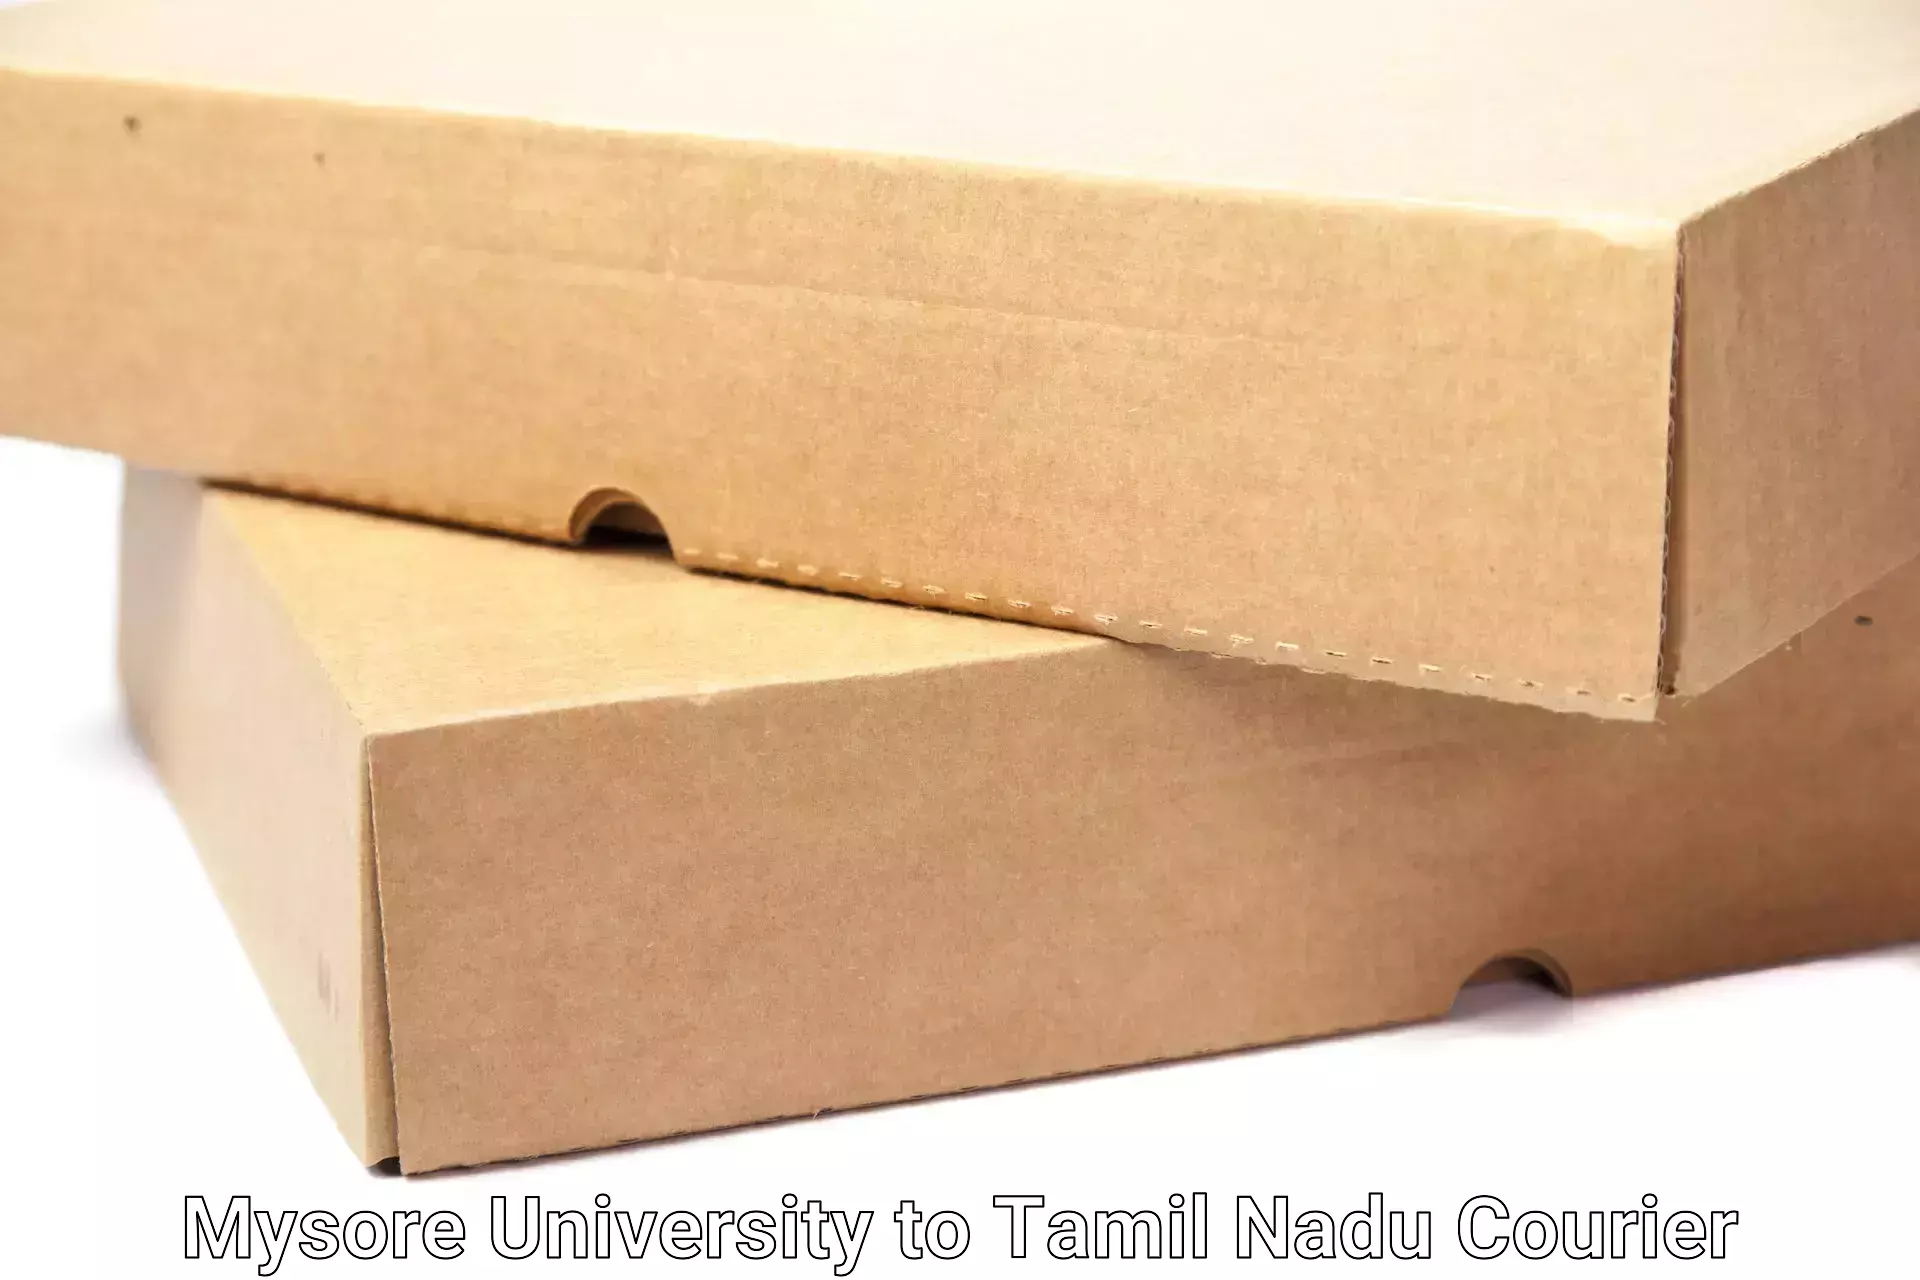 Furniture moving experts Mysore University to Tamil Nadu